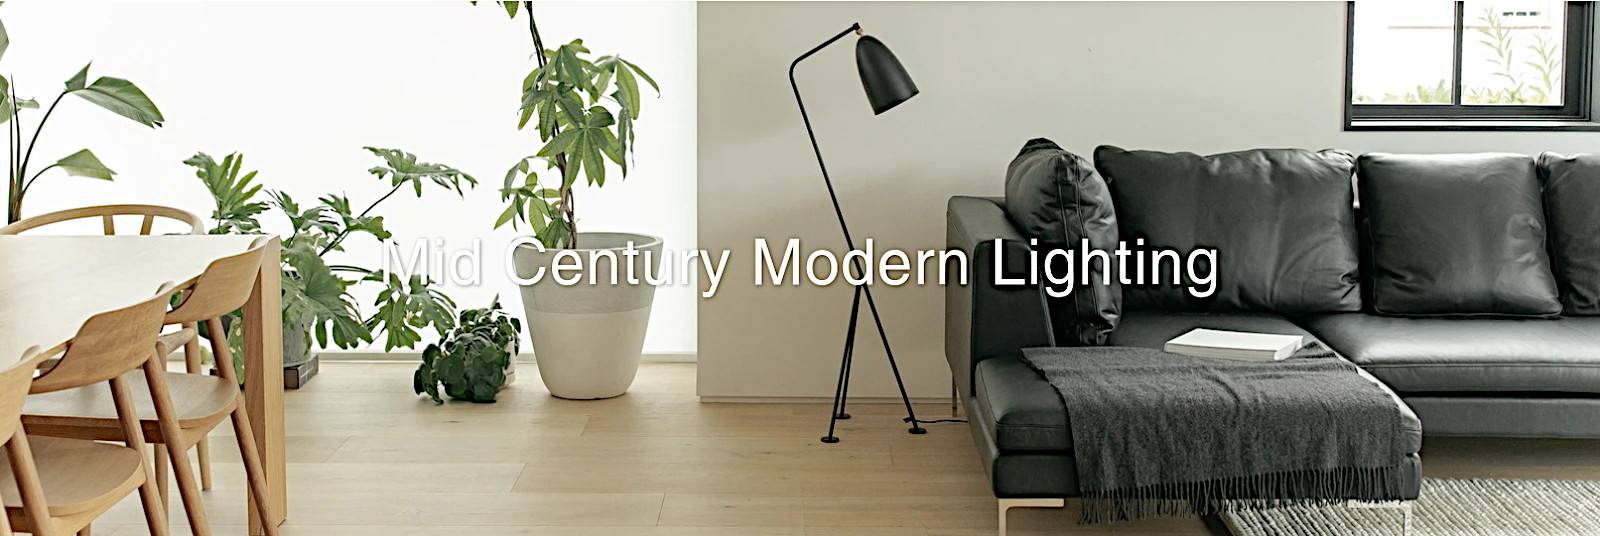 mid century modern lighting promotional price